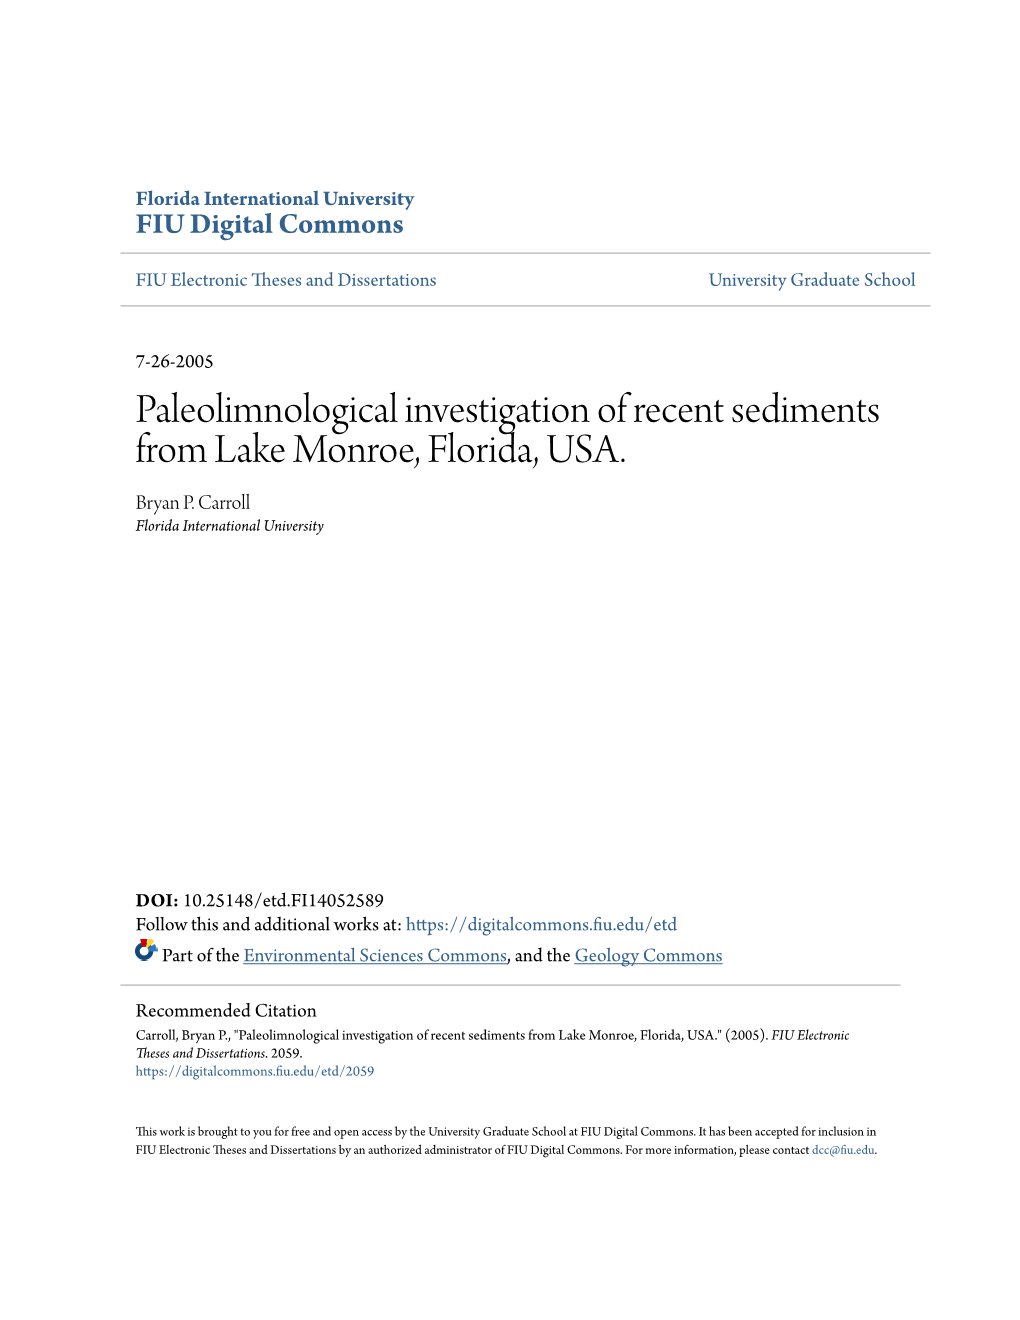 Paleolimnological Investigation of Recent Sediments from Lake Monroe, Florida, USA